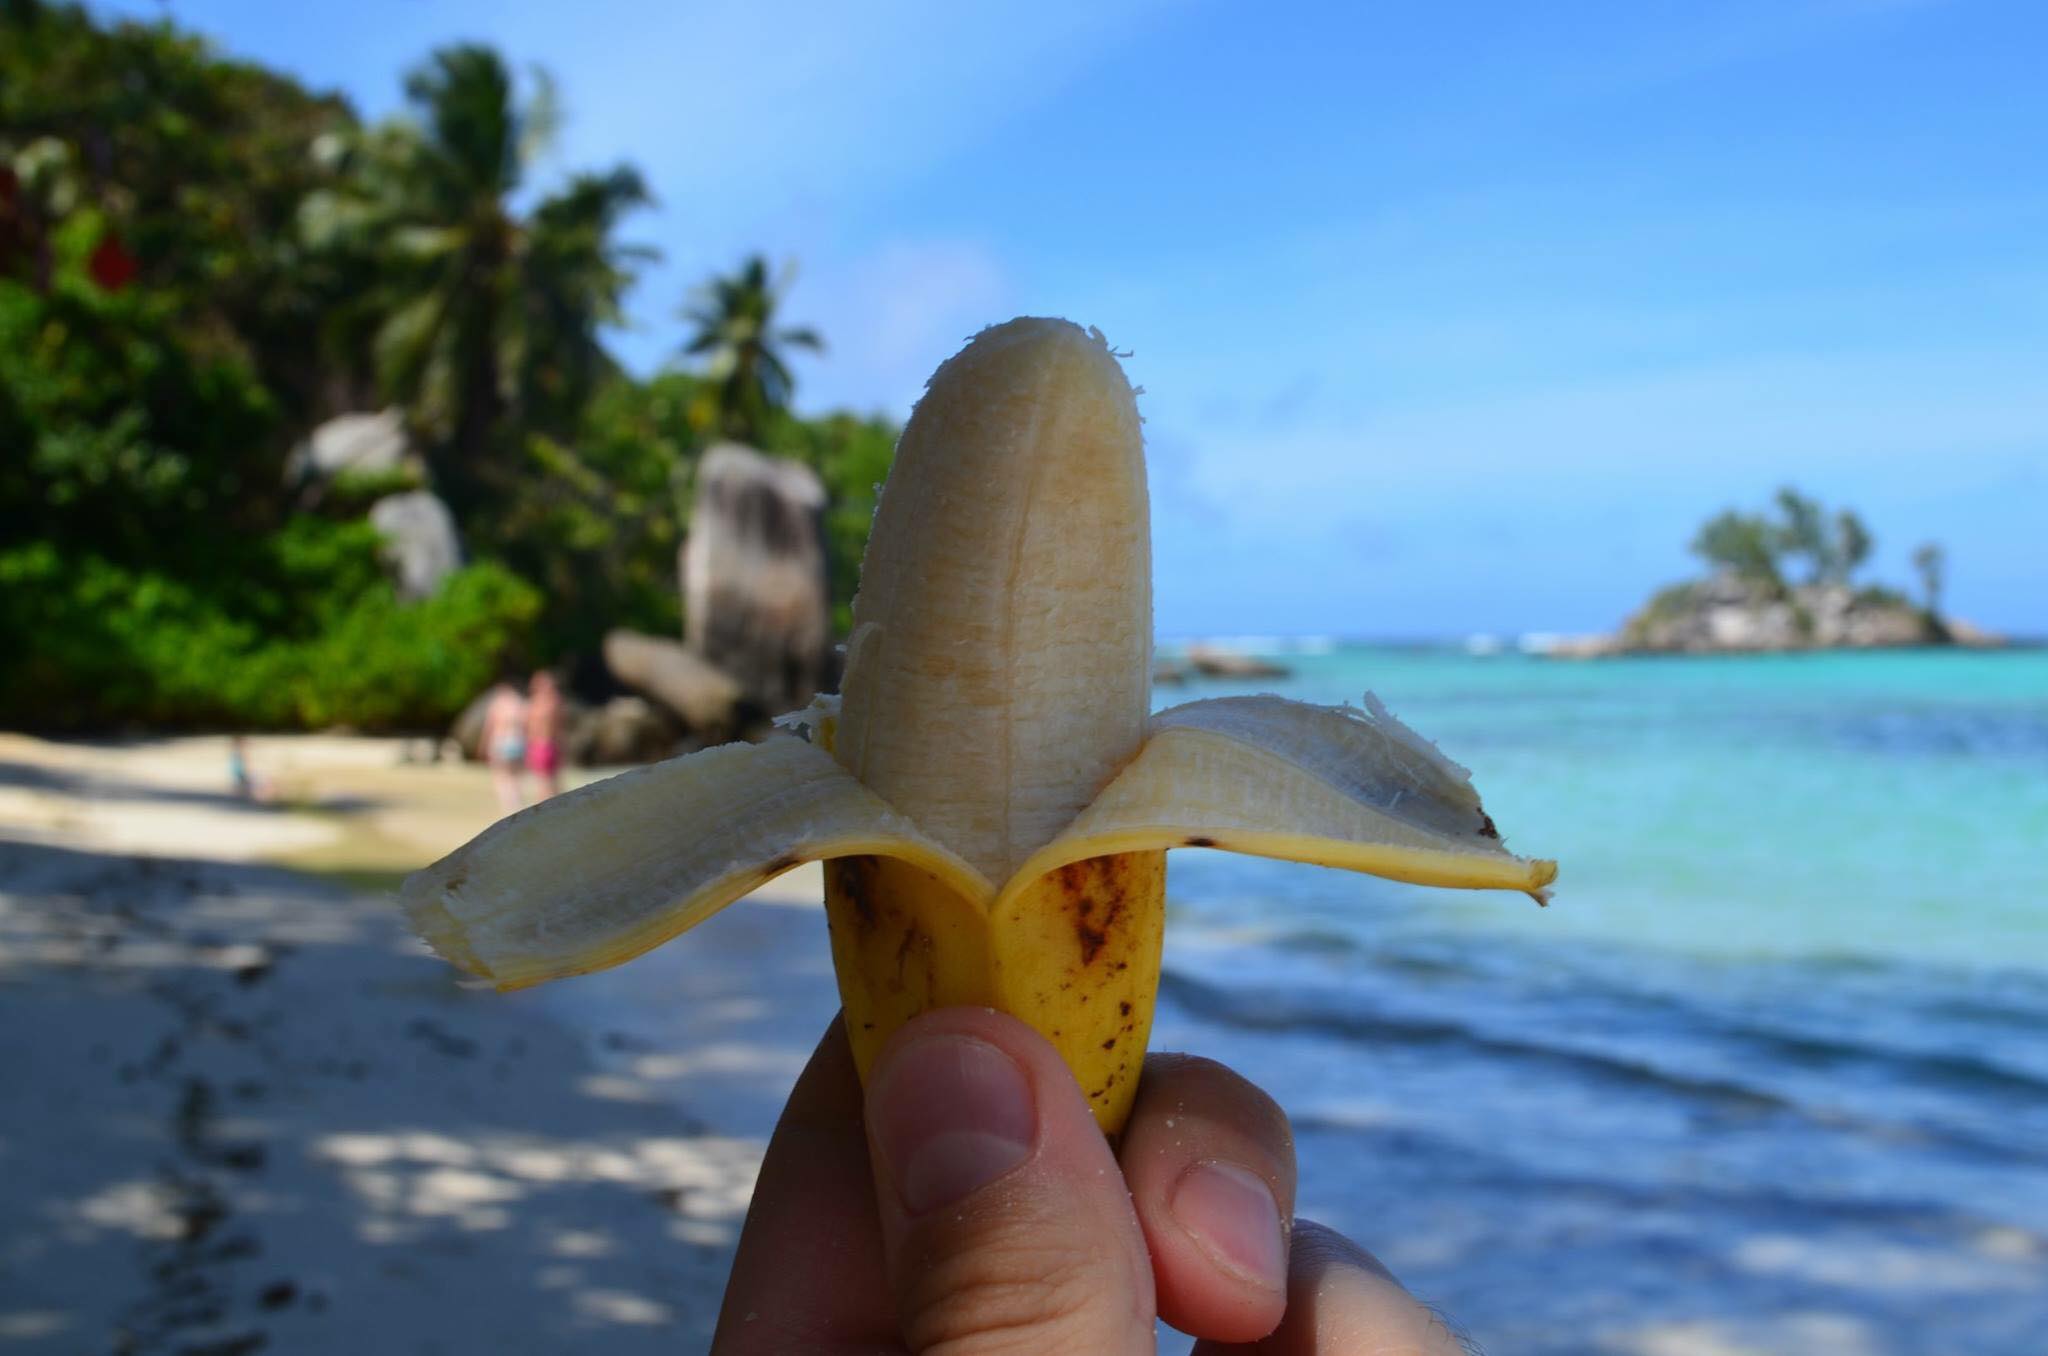 Sweet banana - finger banana